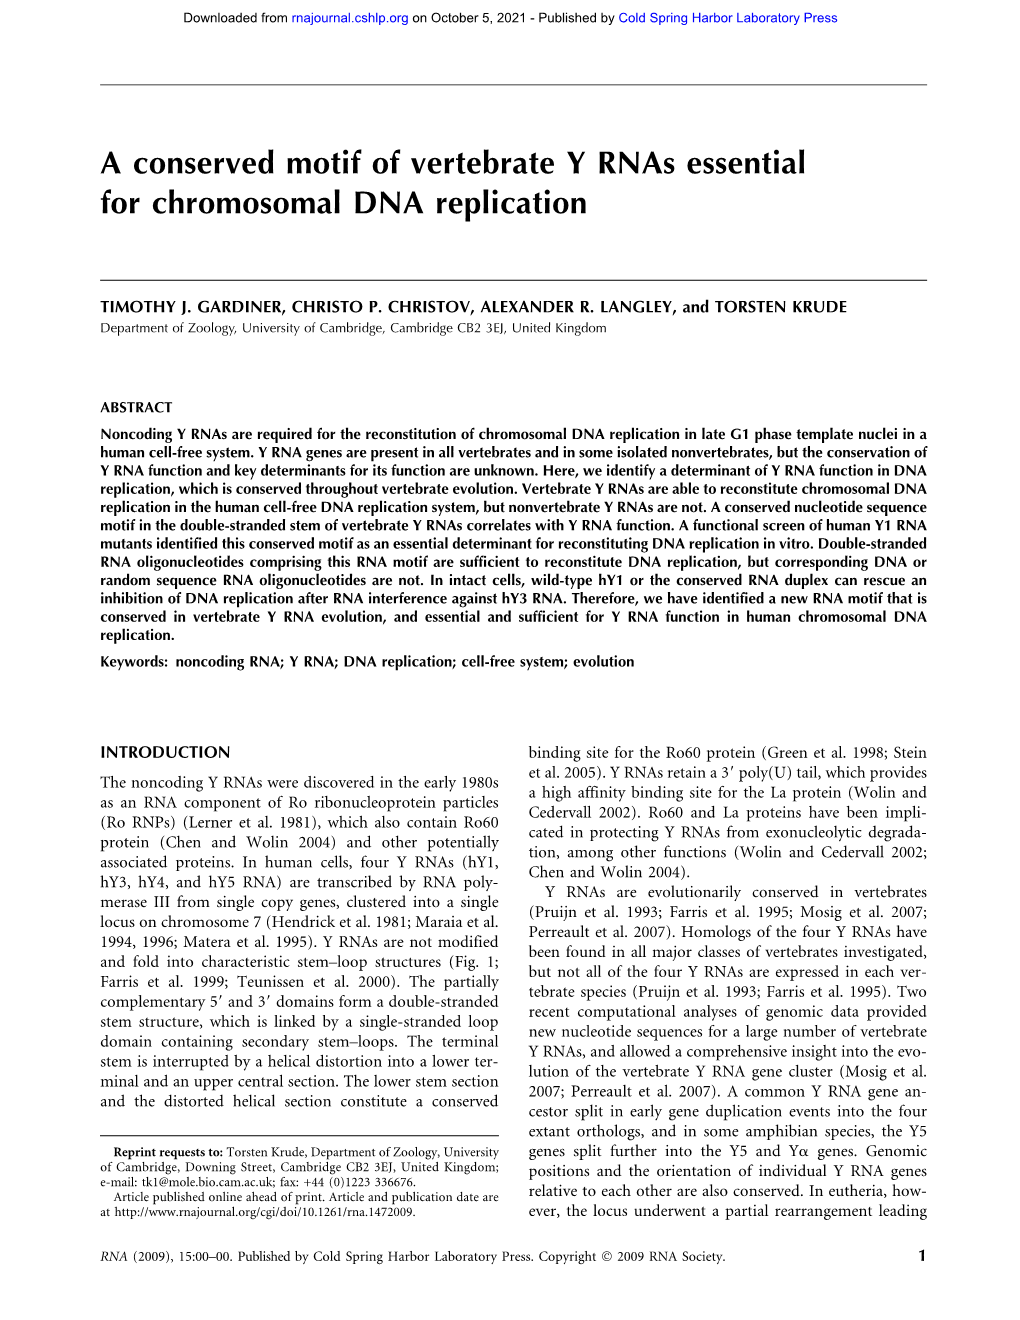 A Conserved Motif of Vertebrate Y Rnas Essential for Chromosomal DNA Replication